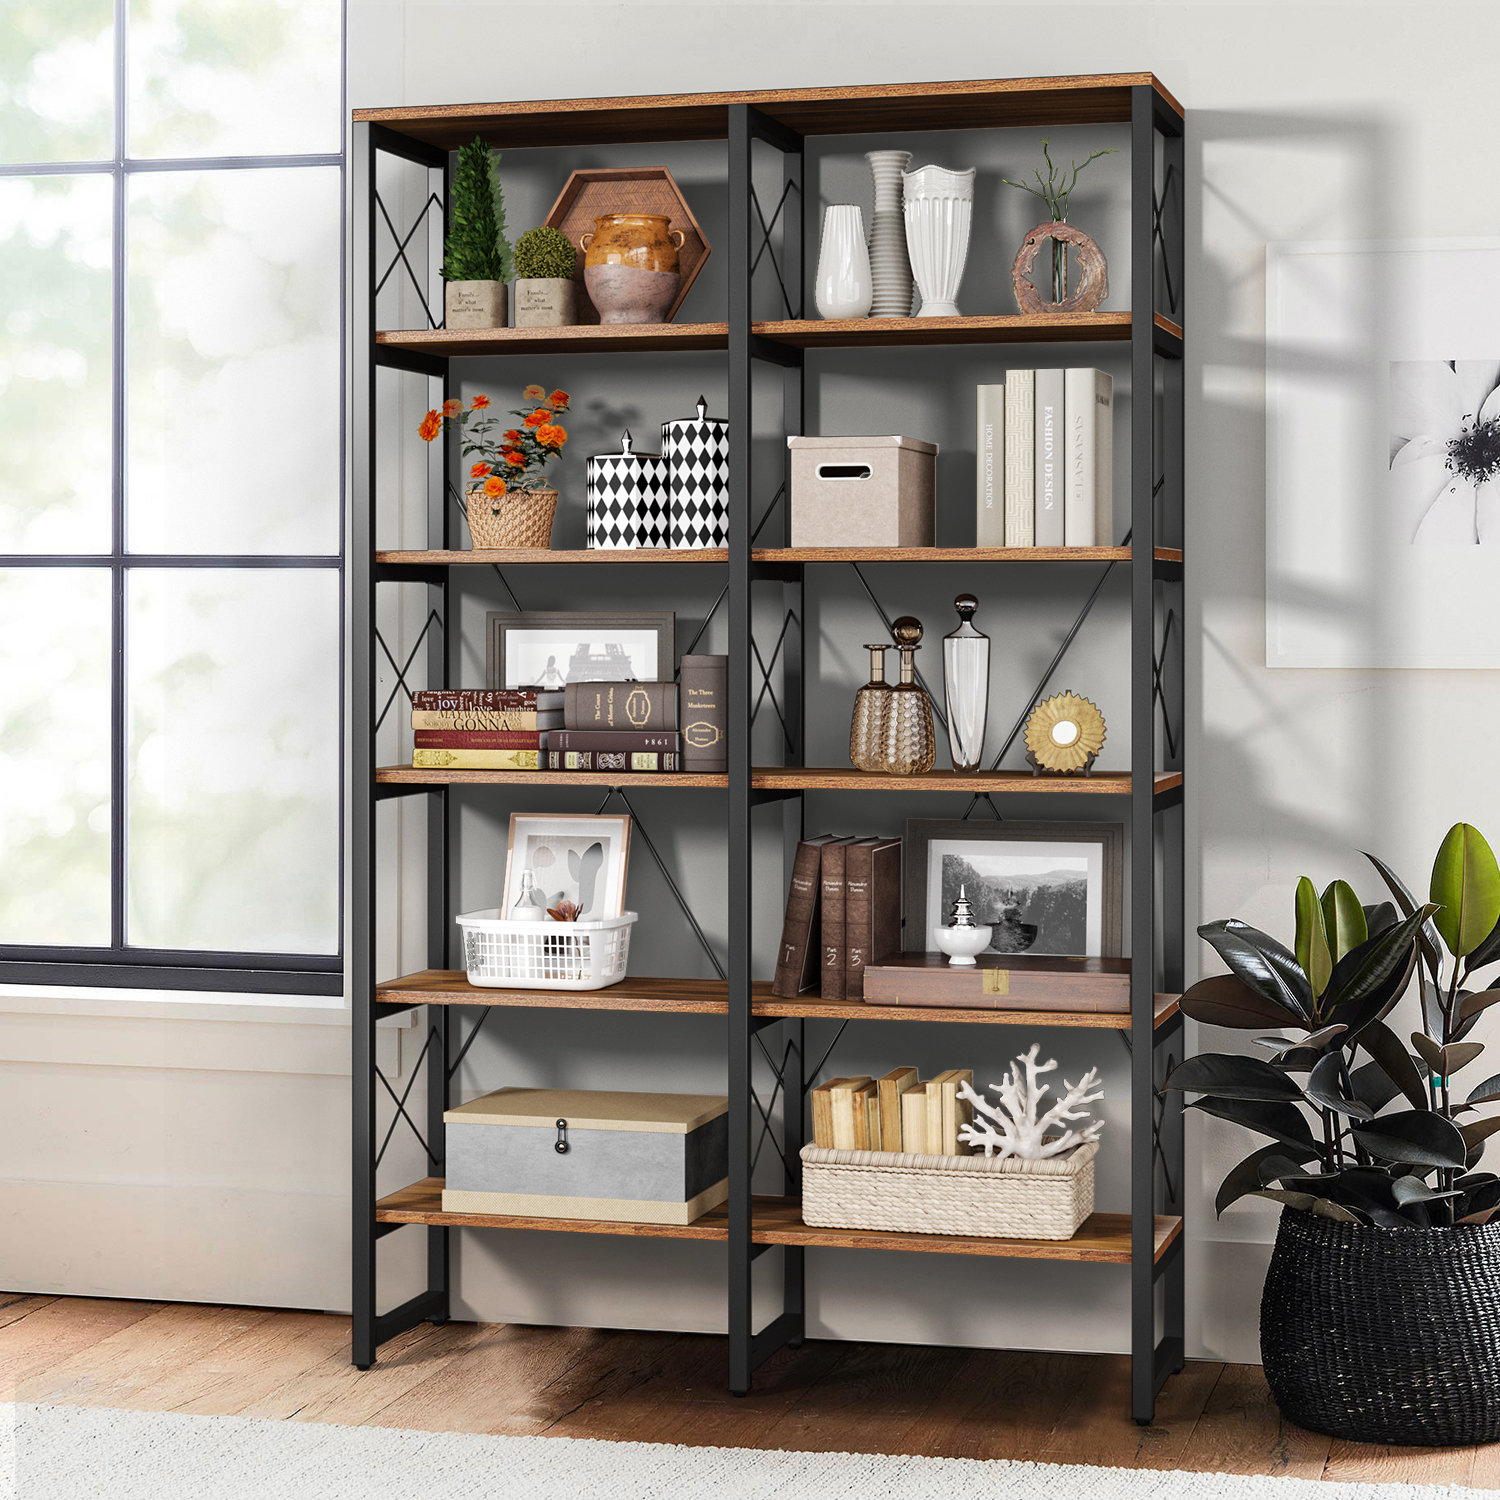 FATORRI Industrial Corner Bookshelf, 5 Tier Tall Corner Bookcase, Wood and Metal